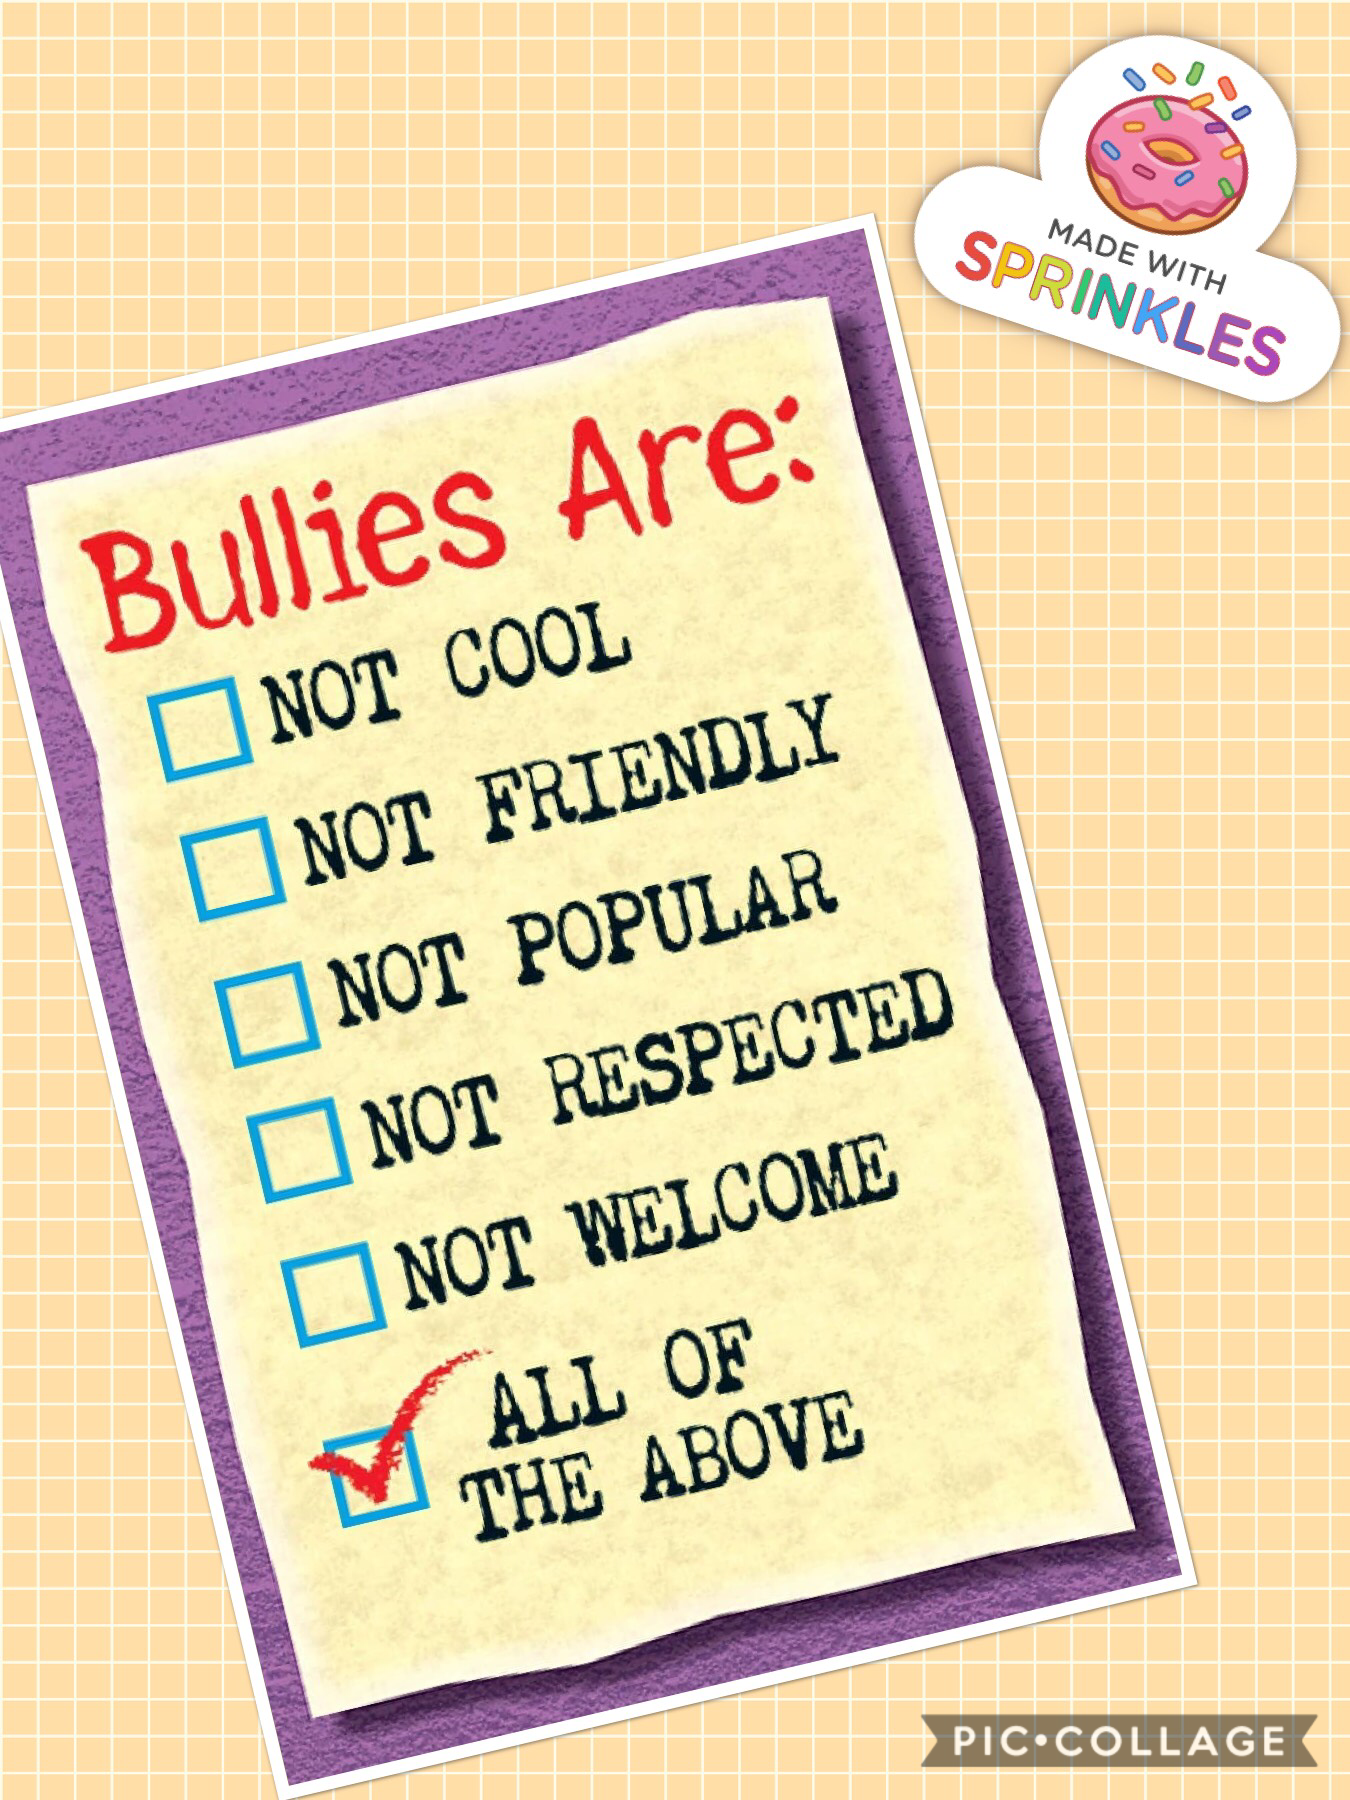 Bullies are NOT nice!